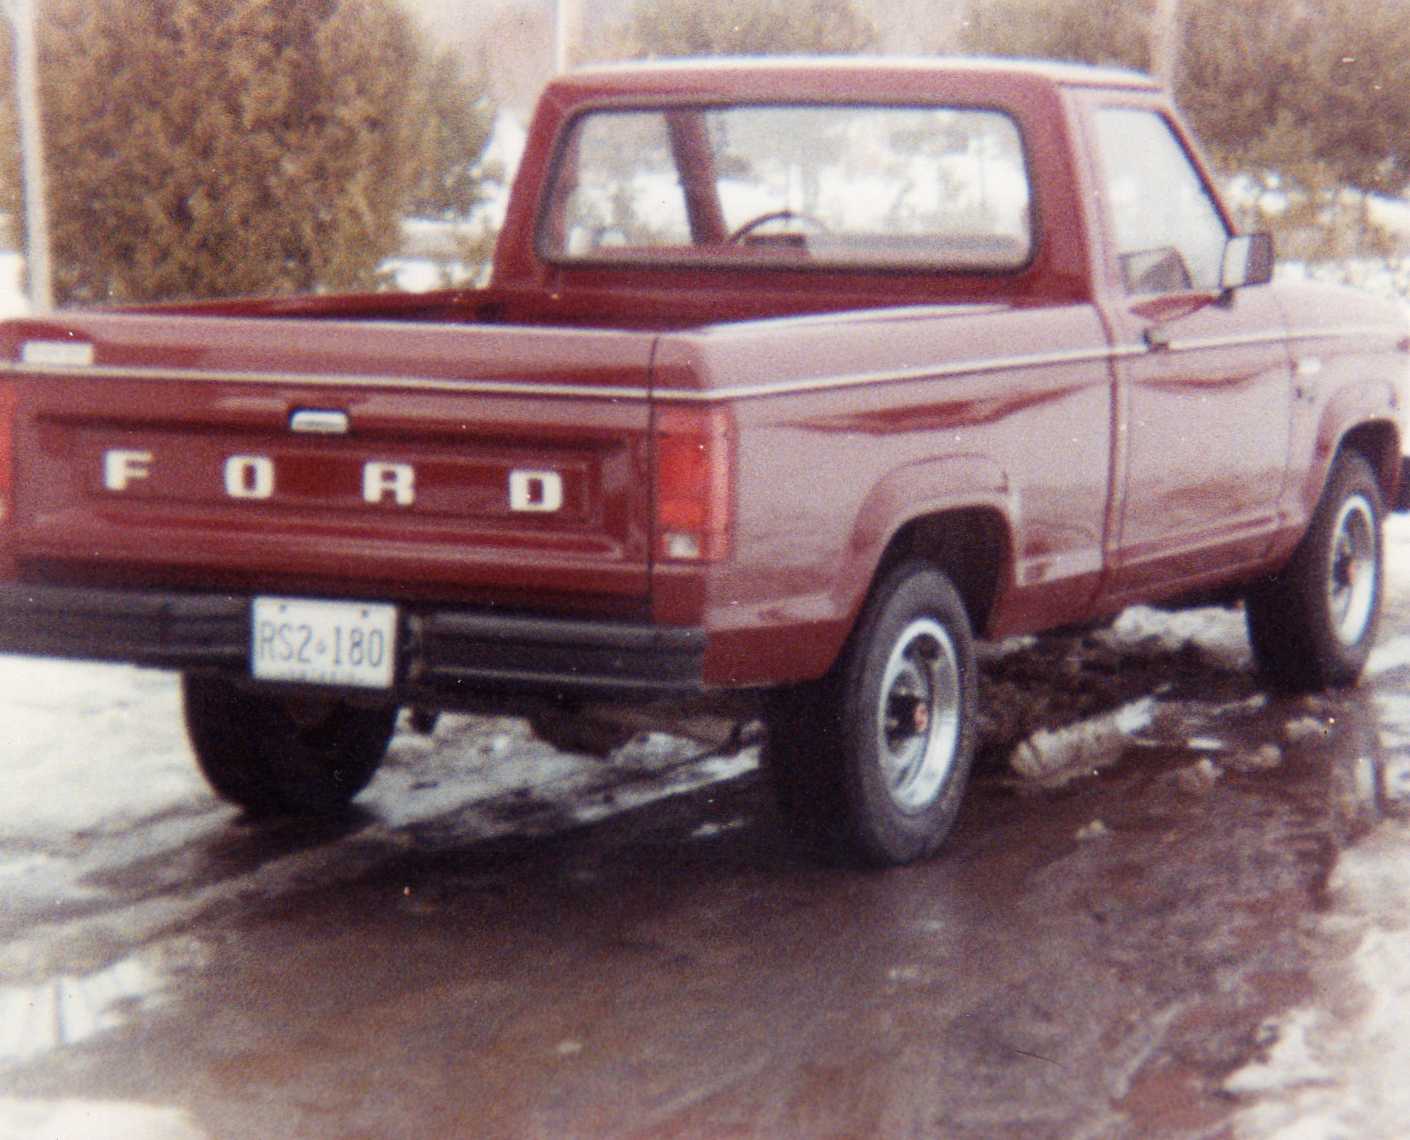 1988 Ford ranger stx review #1